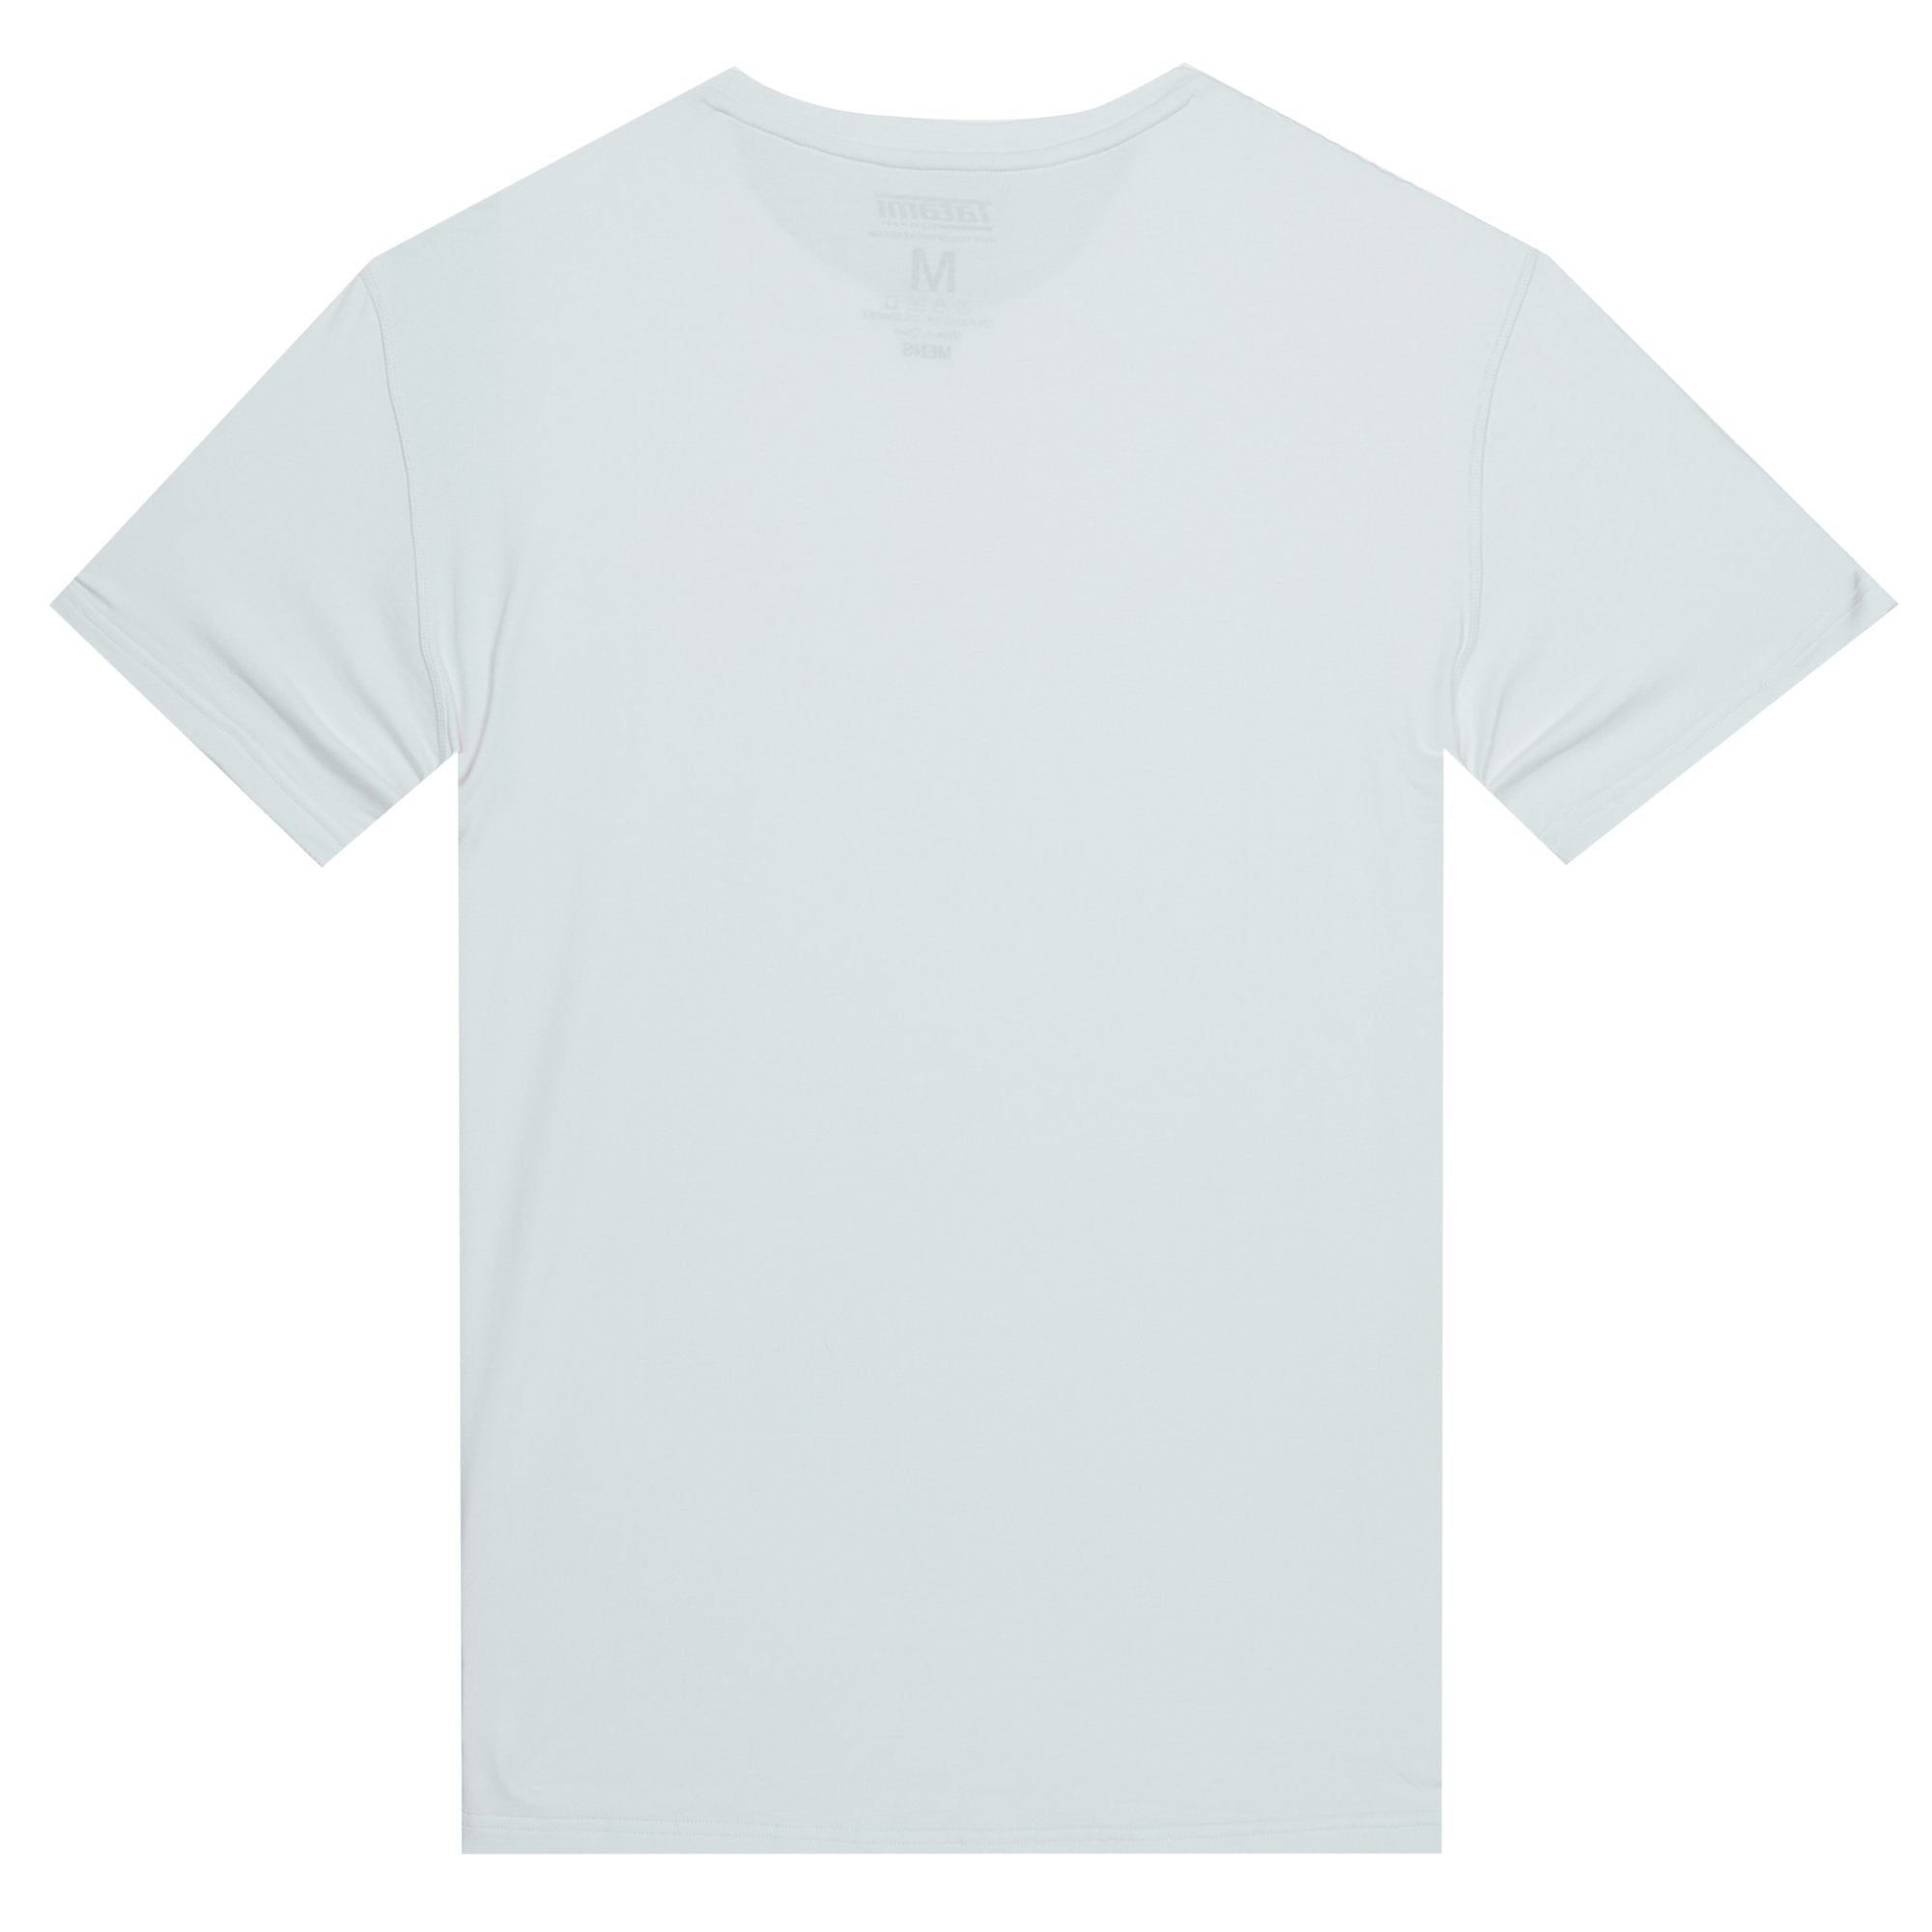 Logo T-Shirt White & Black